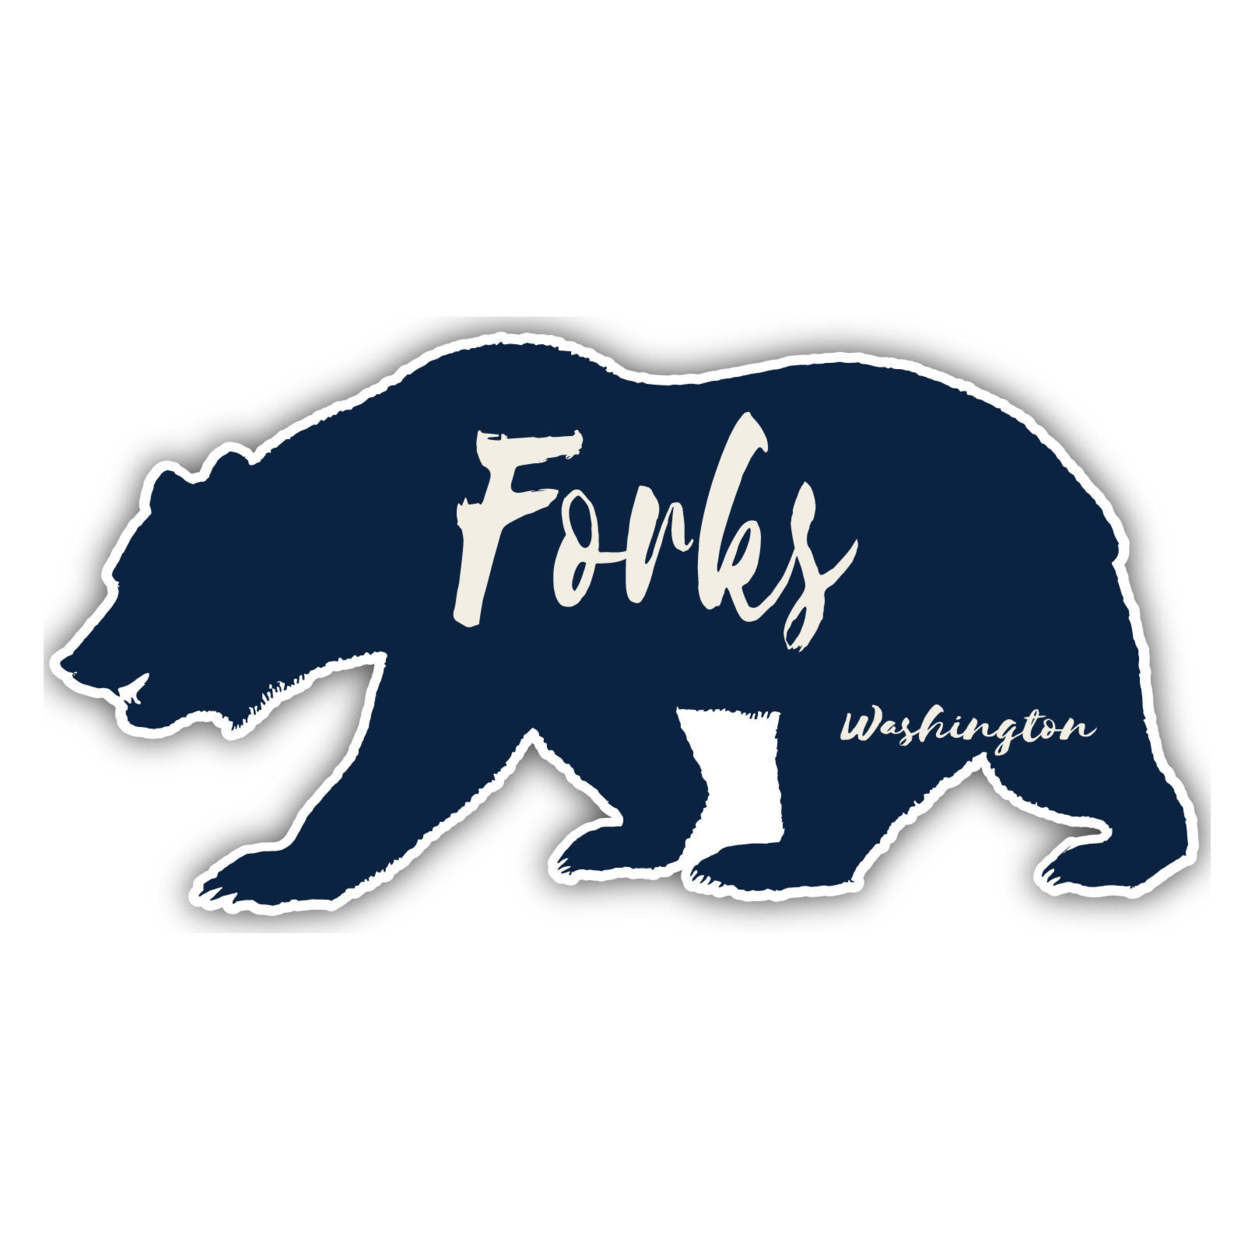 Forks Washington Souvenir Decorative Stickers (Choose Theme And Size) - Single Unit, 8-Inch, Bear